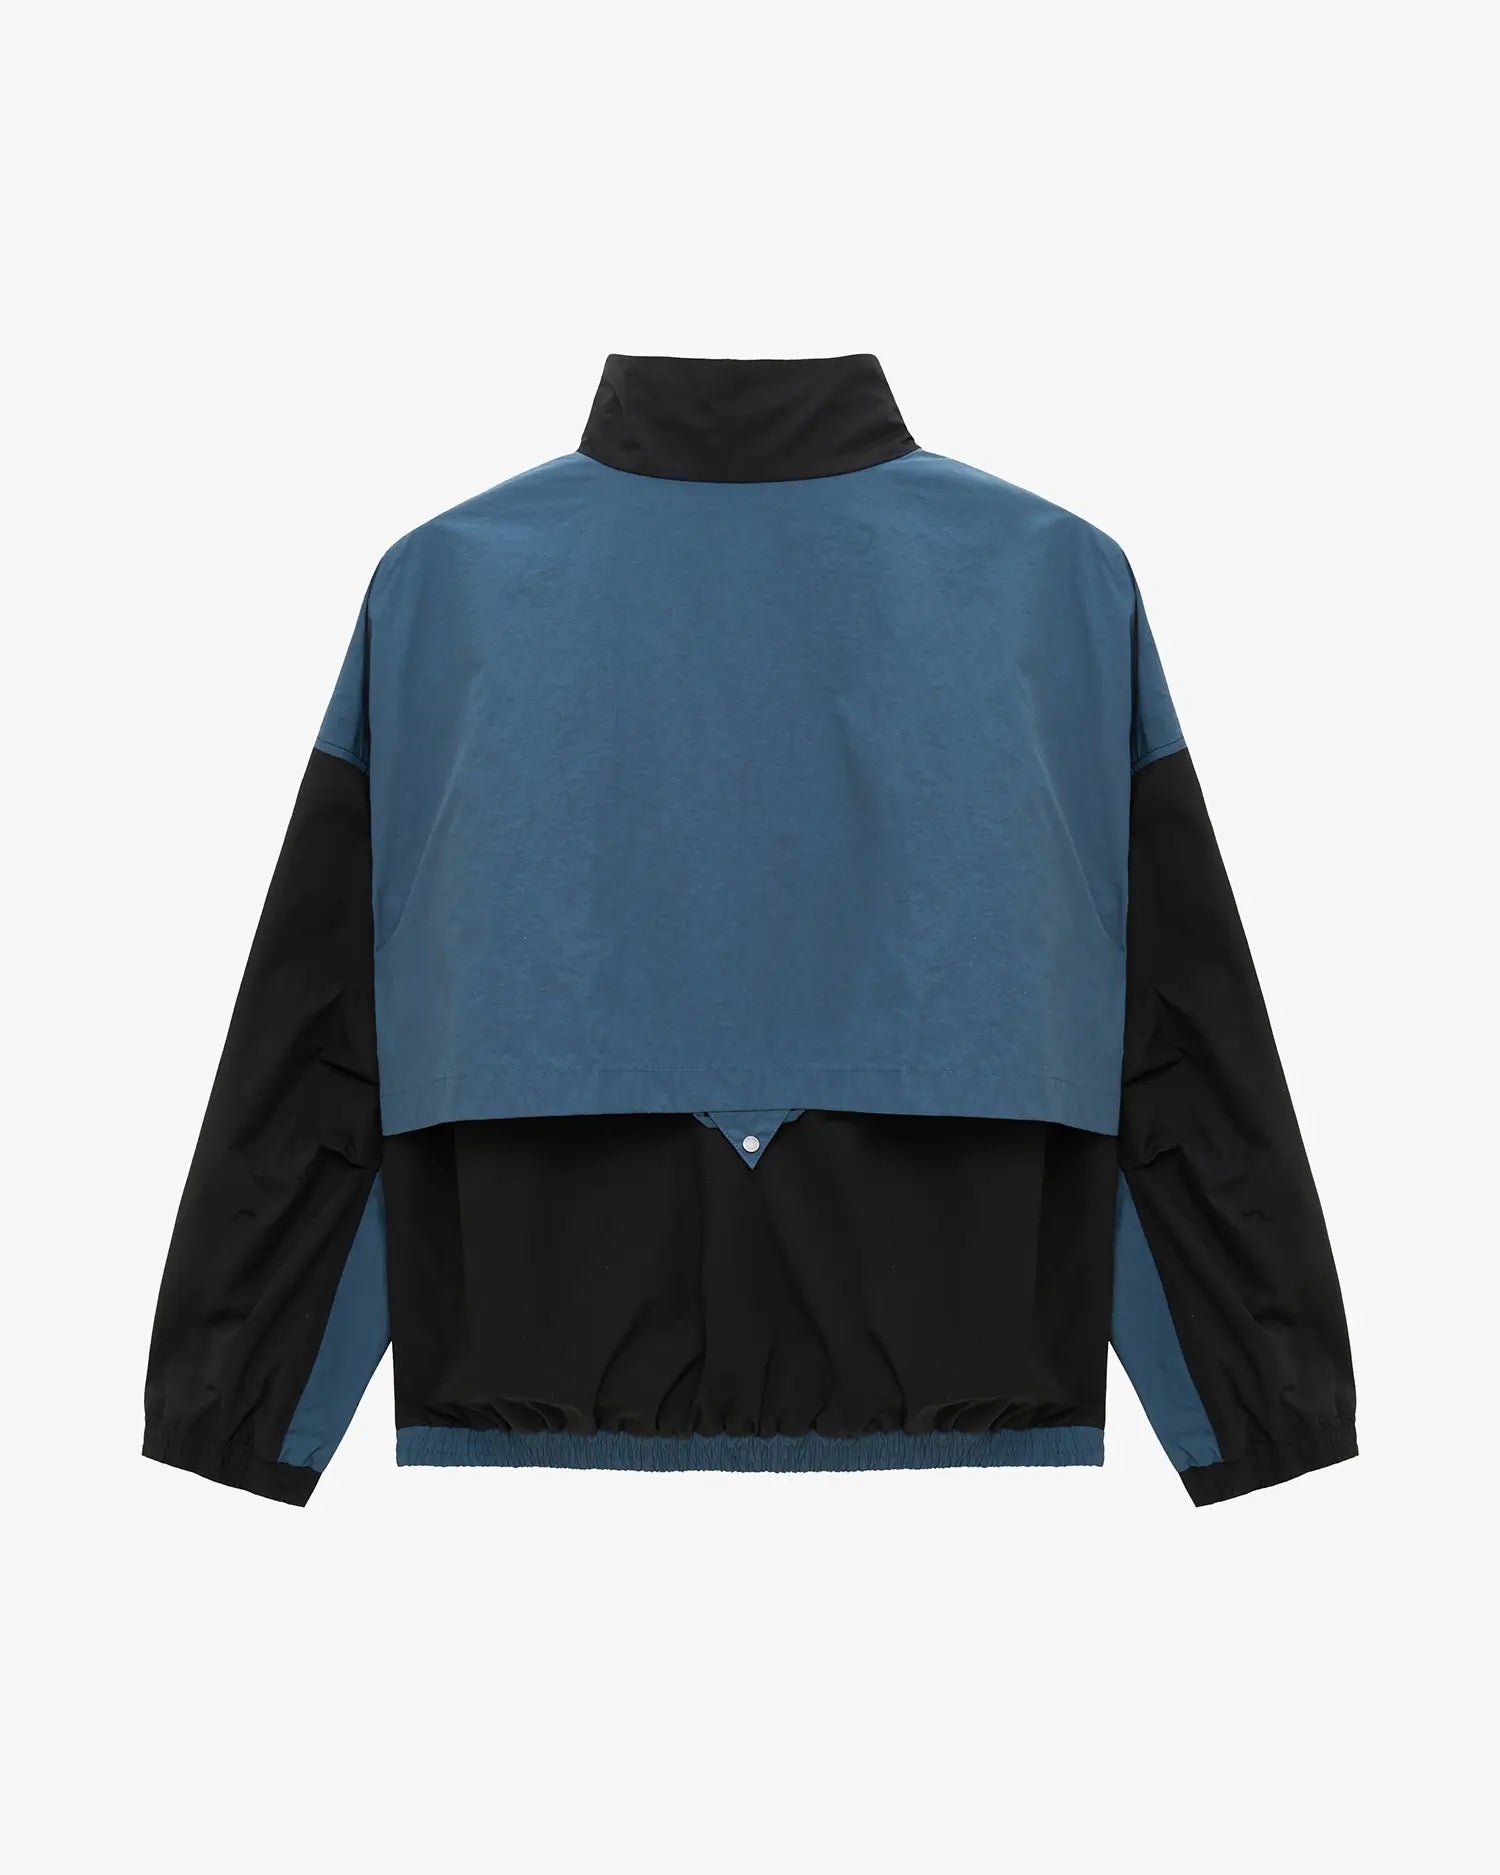 Women's Cropped Track Jacket in Blue & Black 02 #blue-black